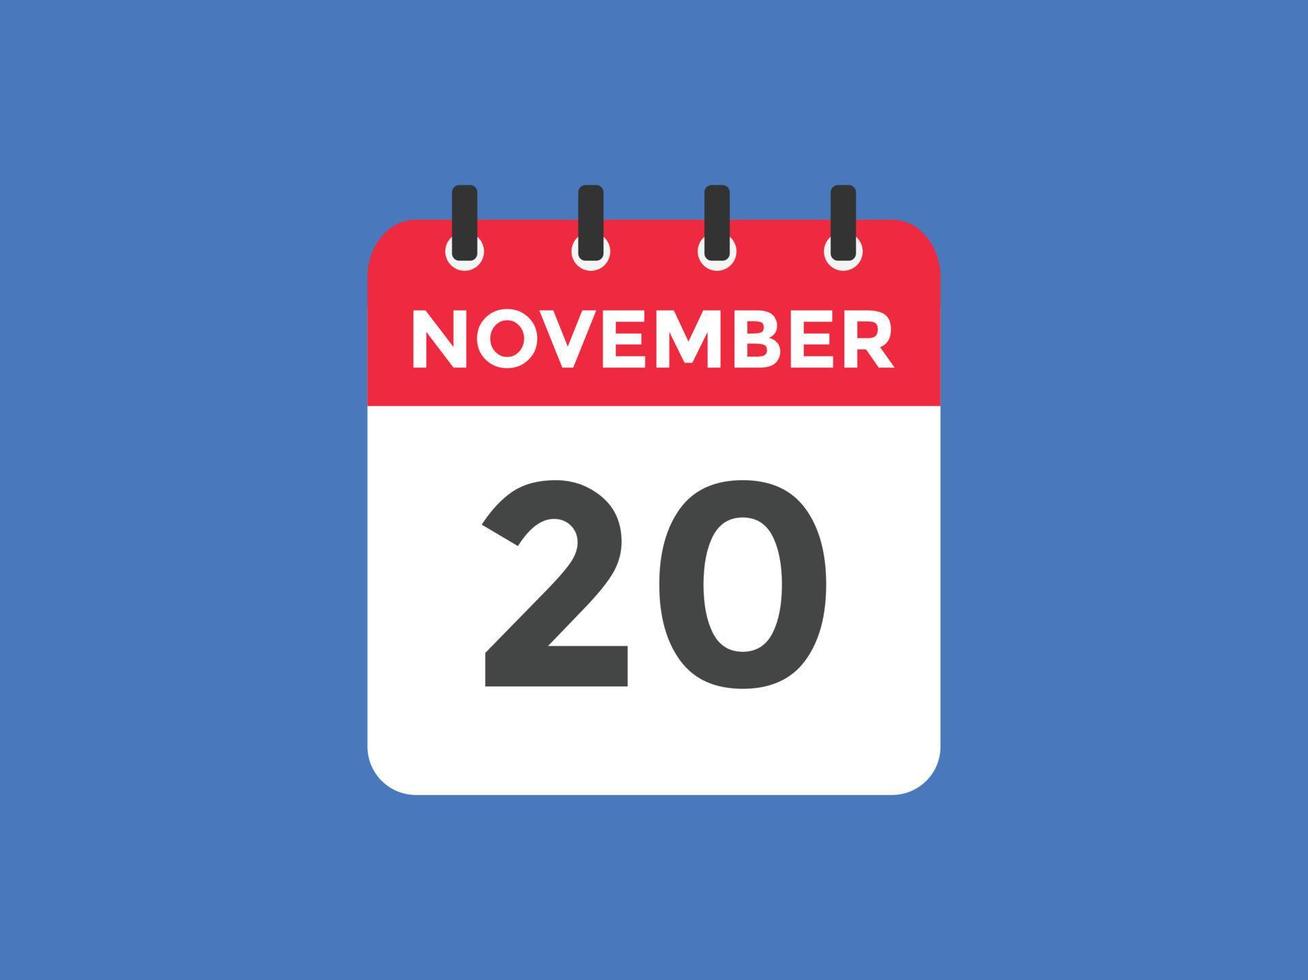 november 20 calendar reminder. 20th november daily calendar icon template. Calendar 20th november icon Design template. Vector illustration